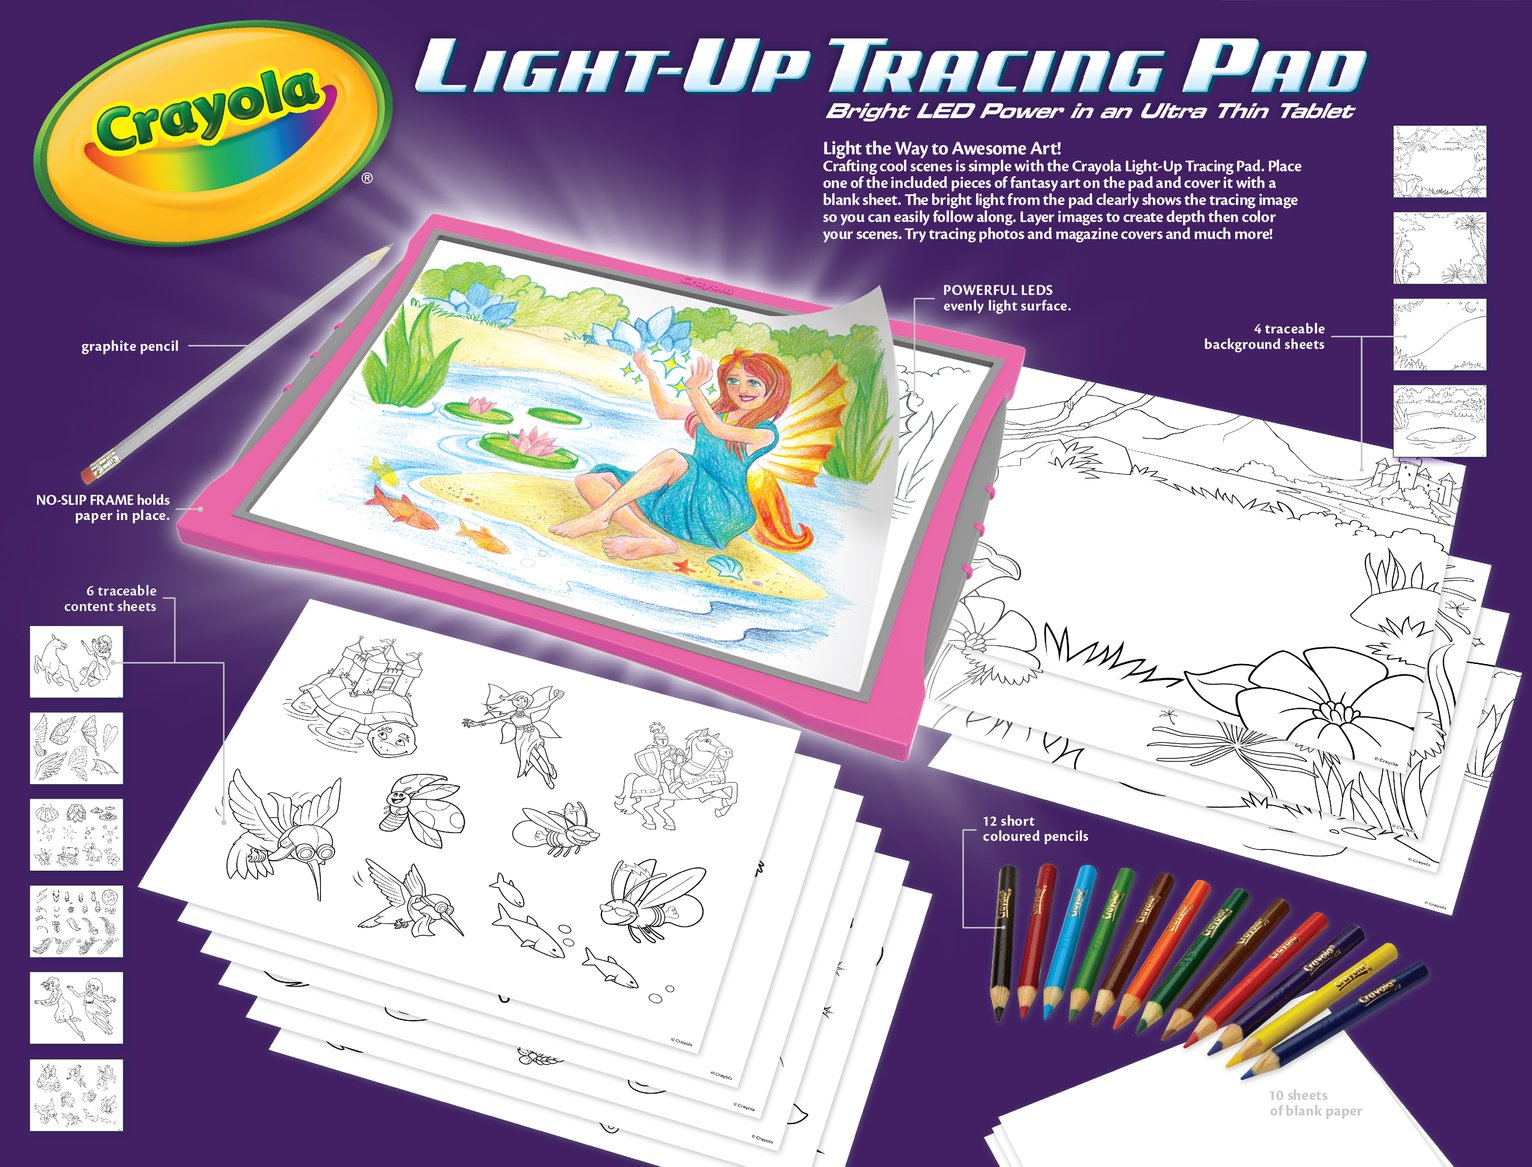 Crayola Light Up Tracing Pad Reviews - Updated October 2022